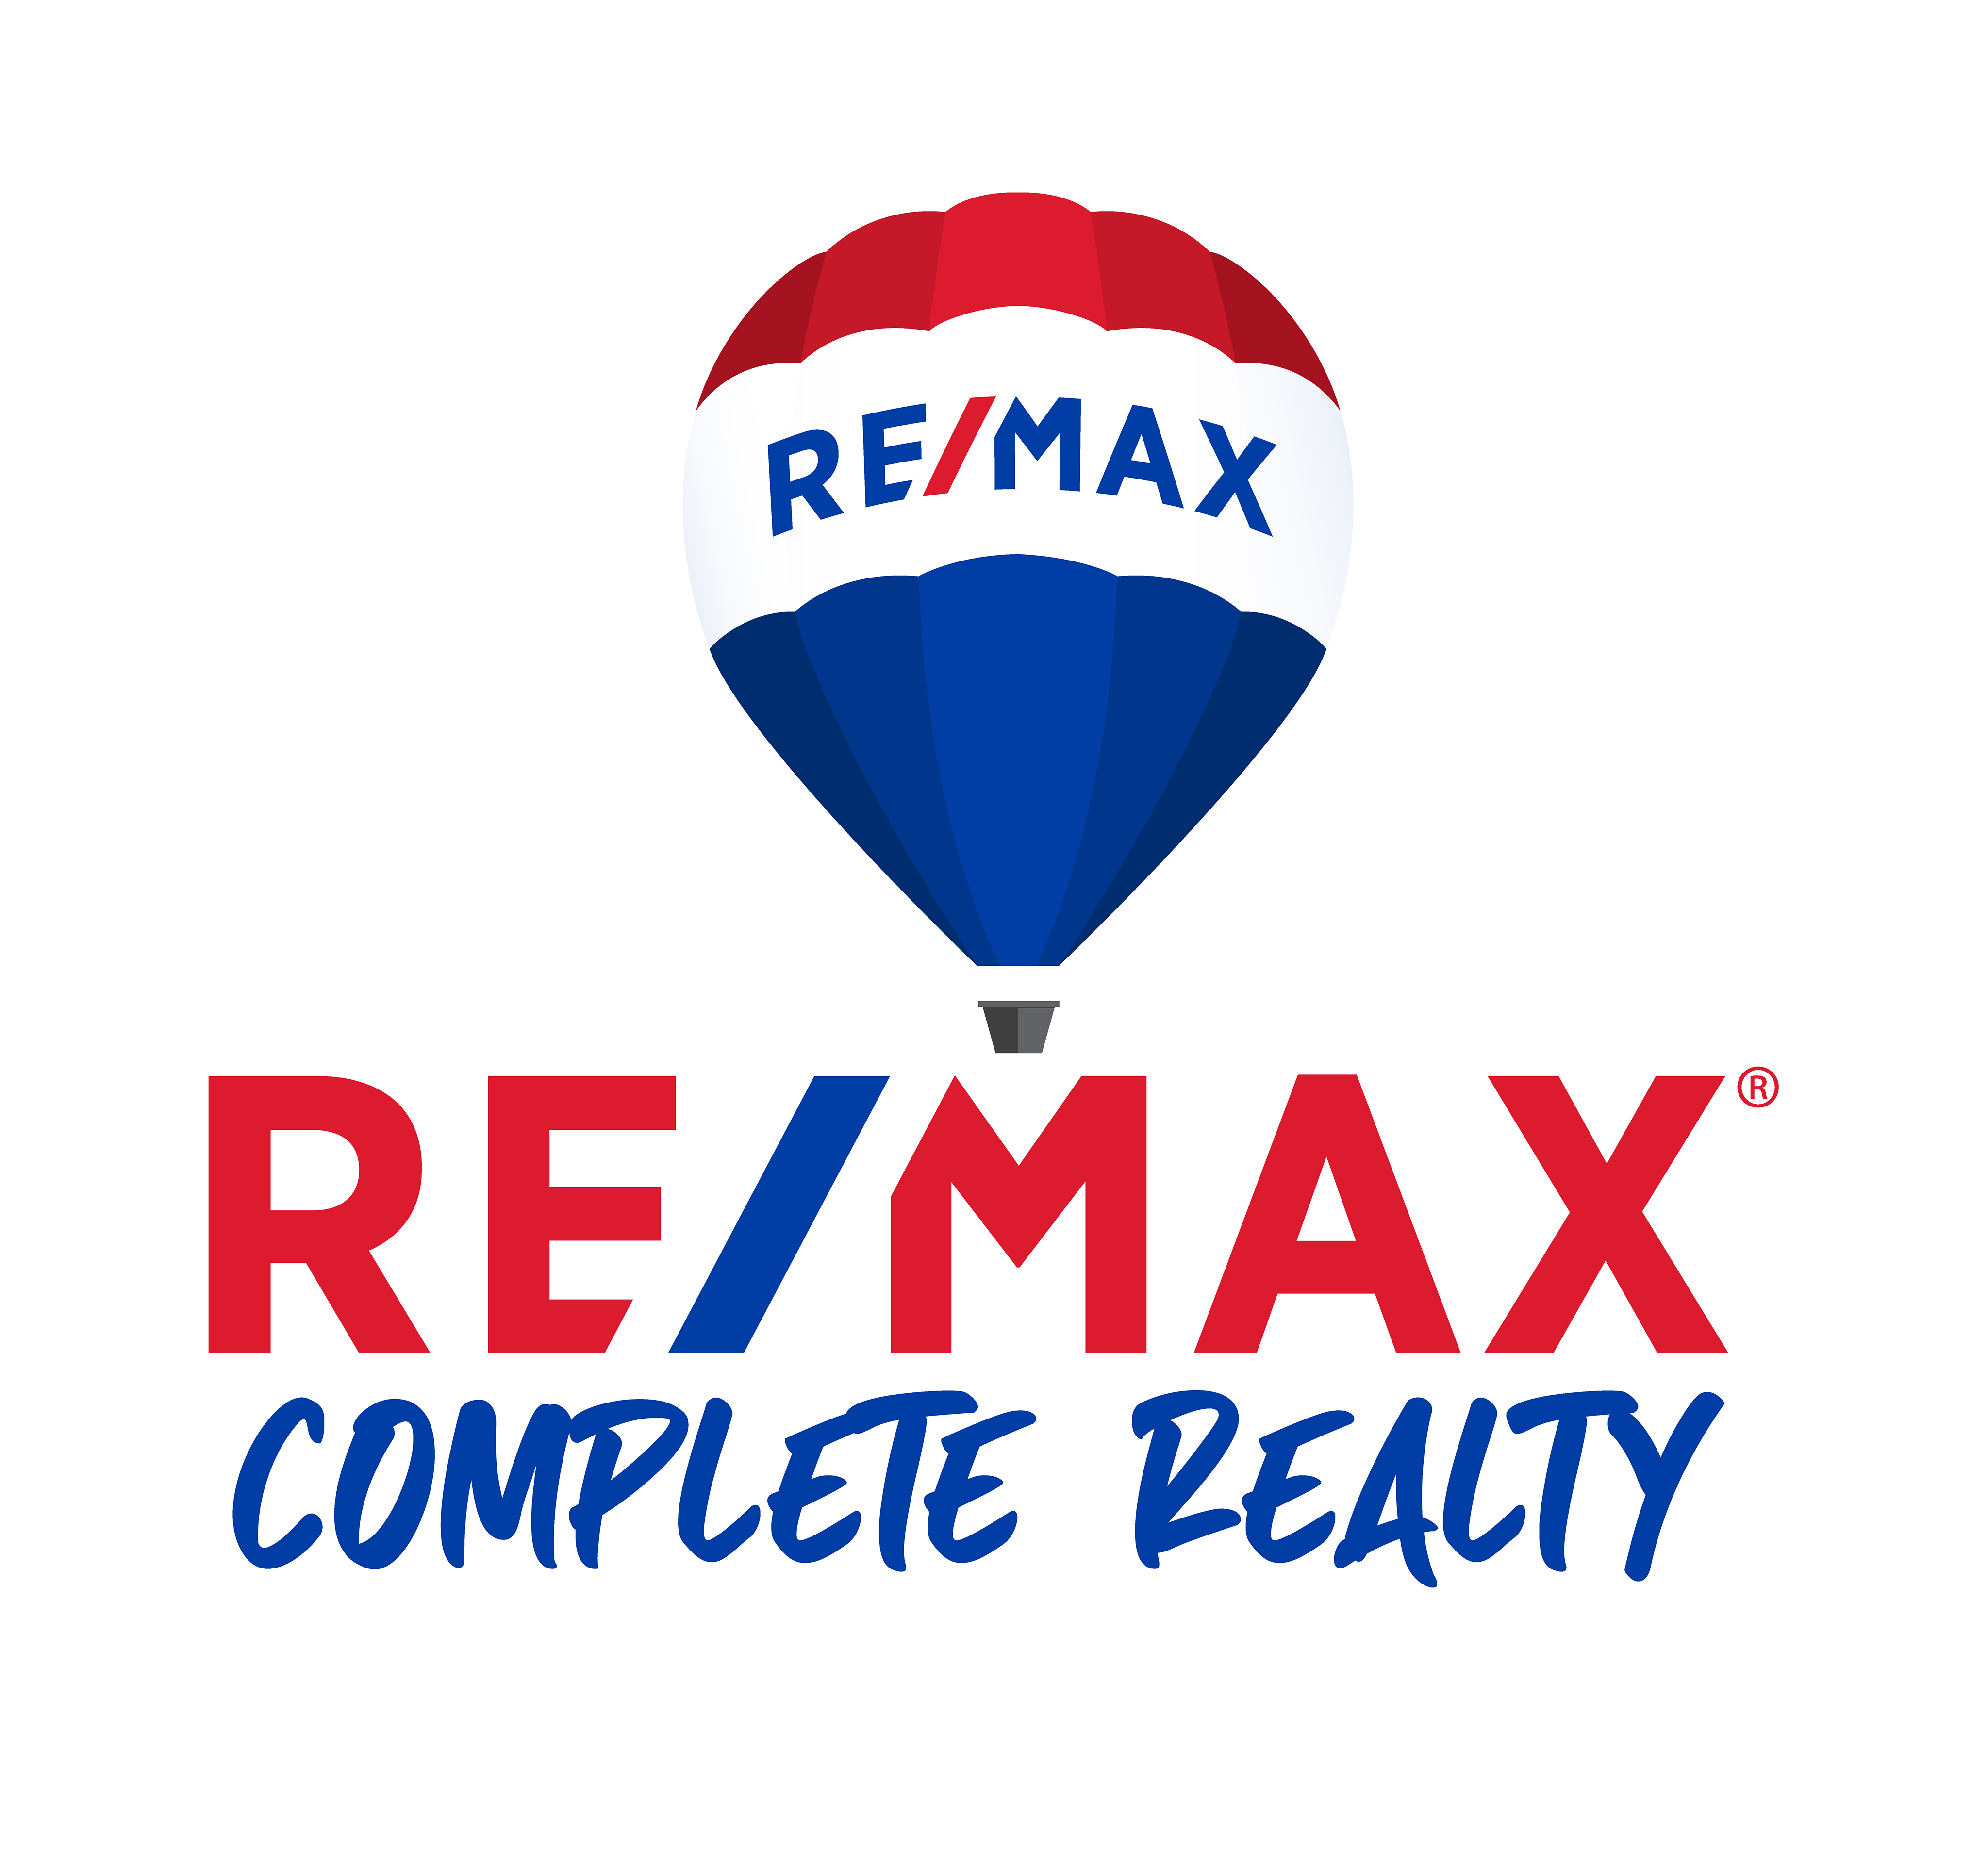 REMAX Complete Realty - Calgary, Alberta